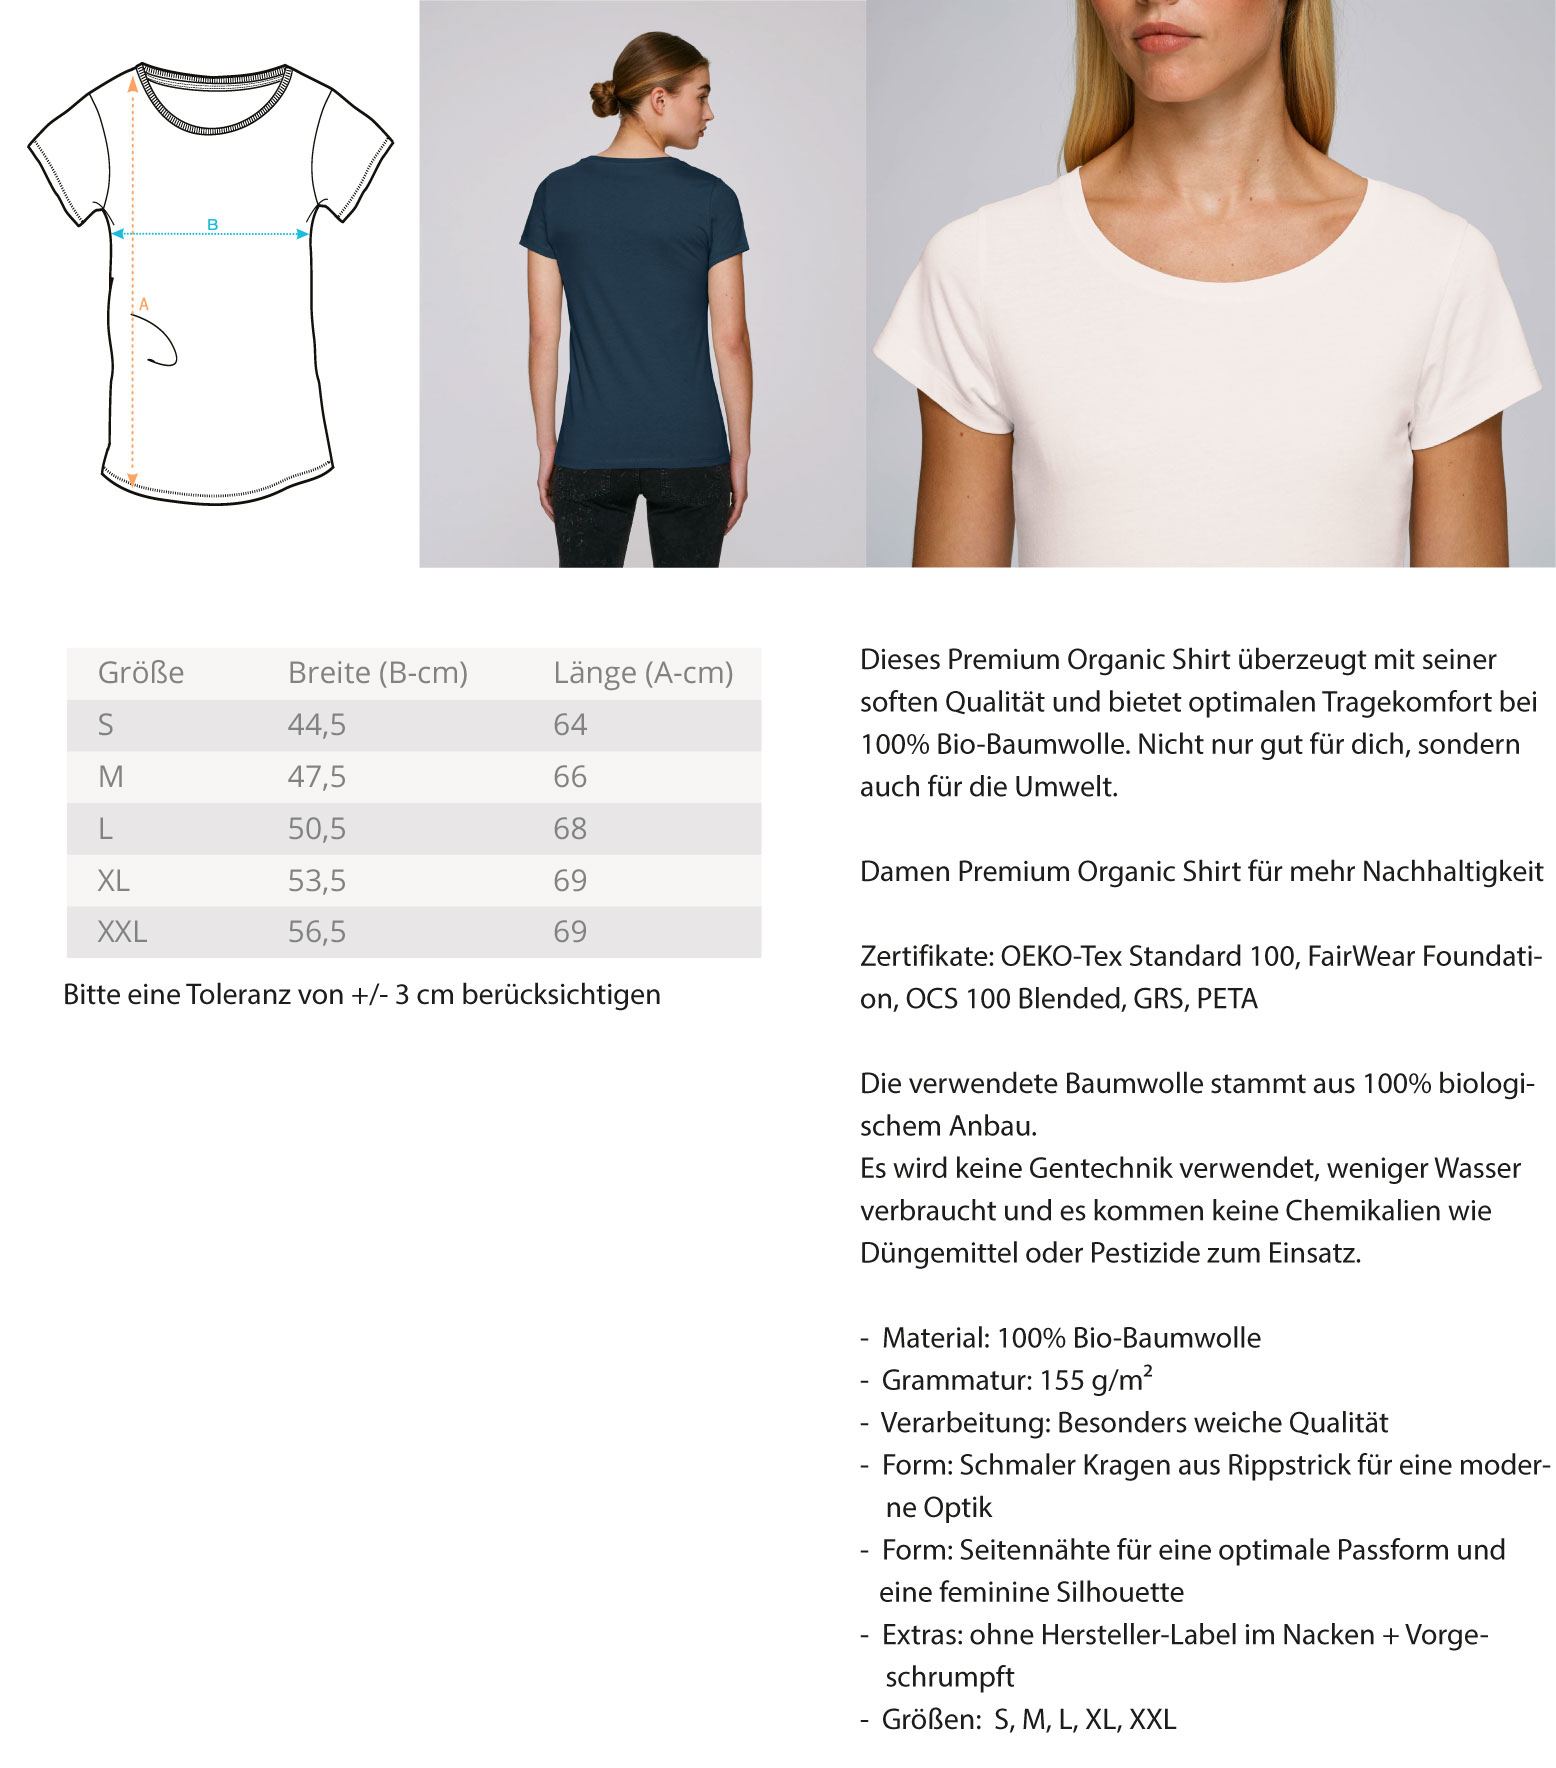 Farn (Damen/Tailliert Premium Organic T-Shirt ST/ST)